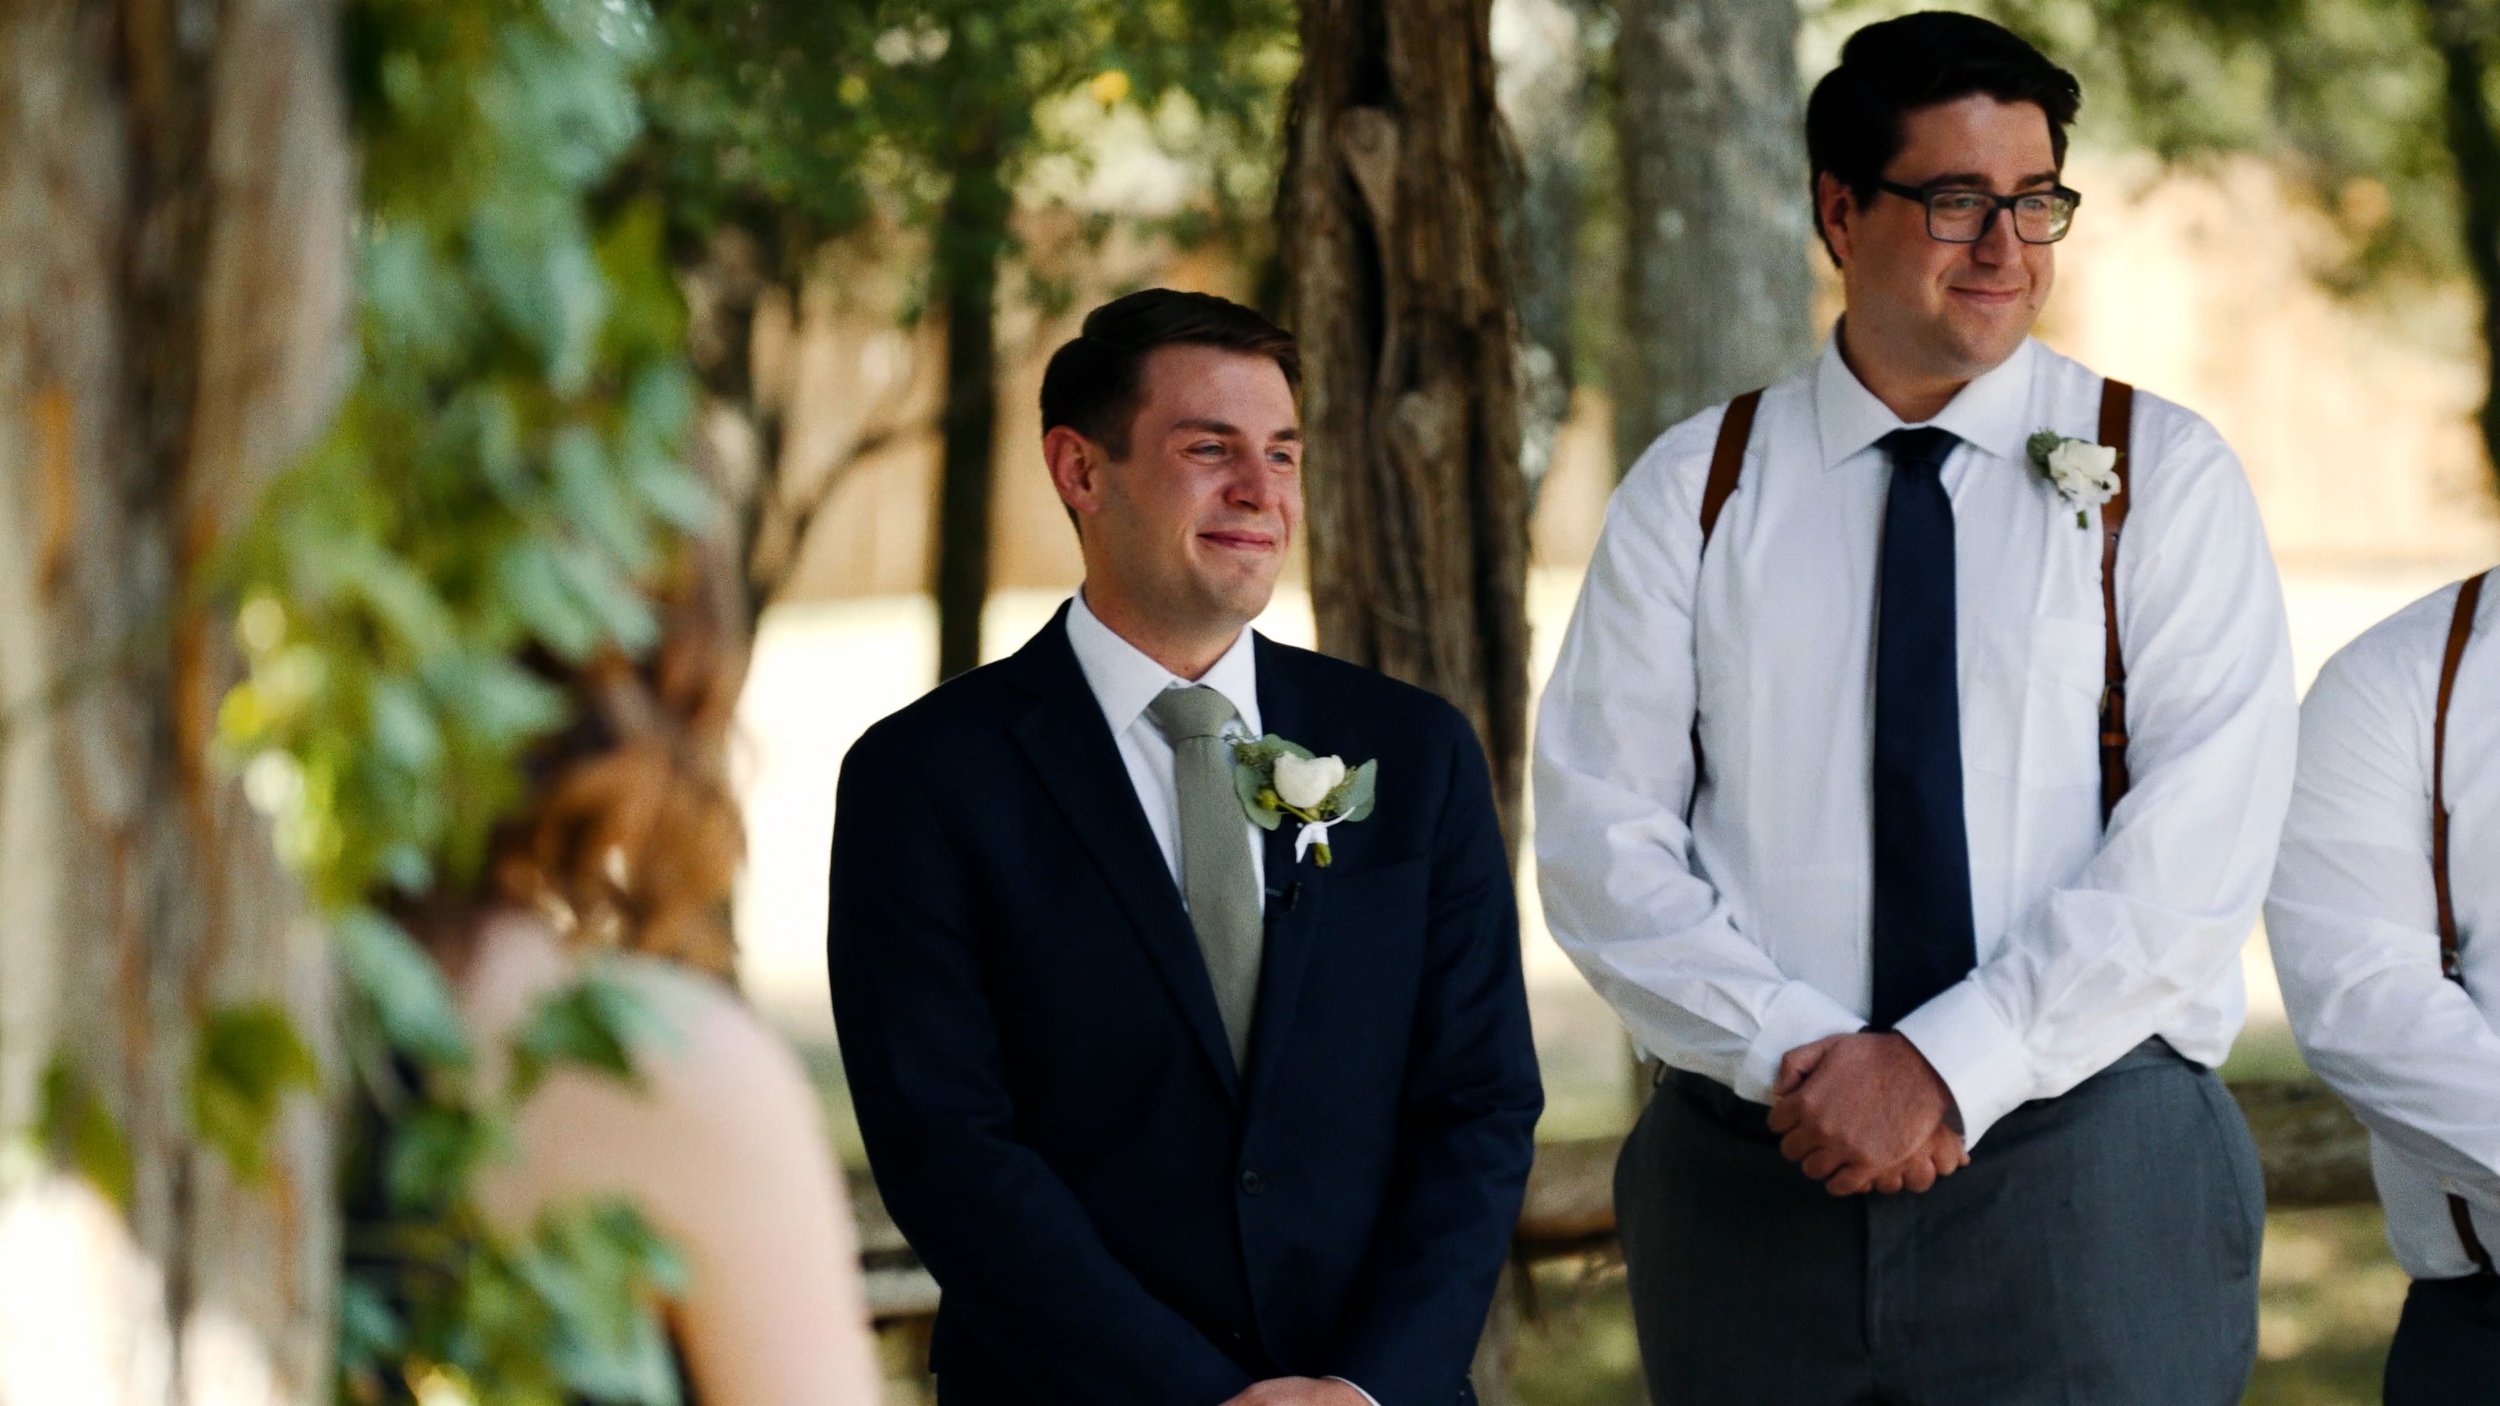 groom sees bride walking down aisle in wedding ceremony emotional smiling